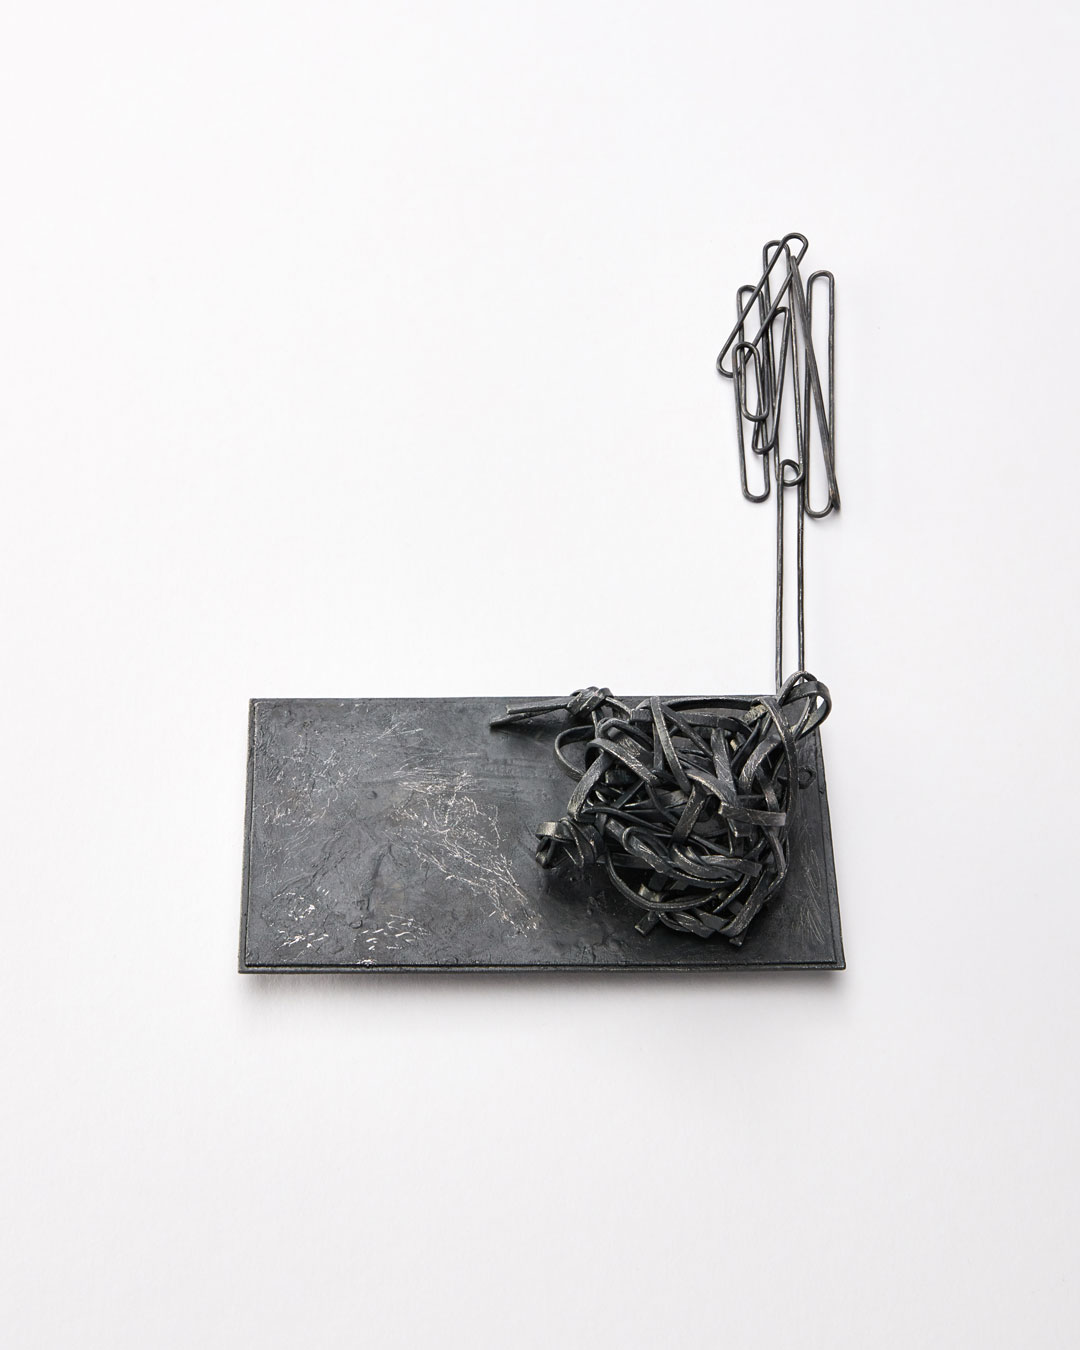 Iris Bodemer, Gegenüberstellung 2 (Juxtapositie 2), 2019, hanger; zilver, thermoplast, 70 x 130 x 40 mm, €4000